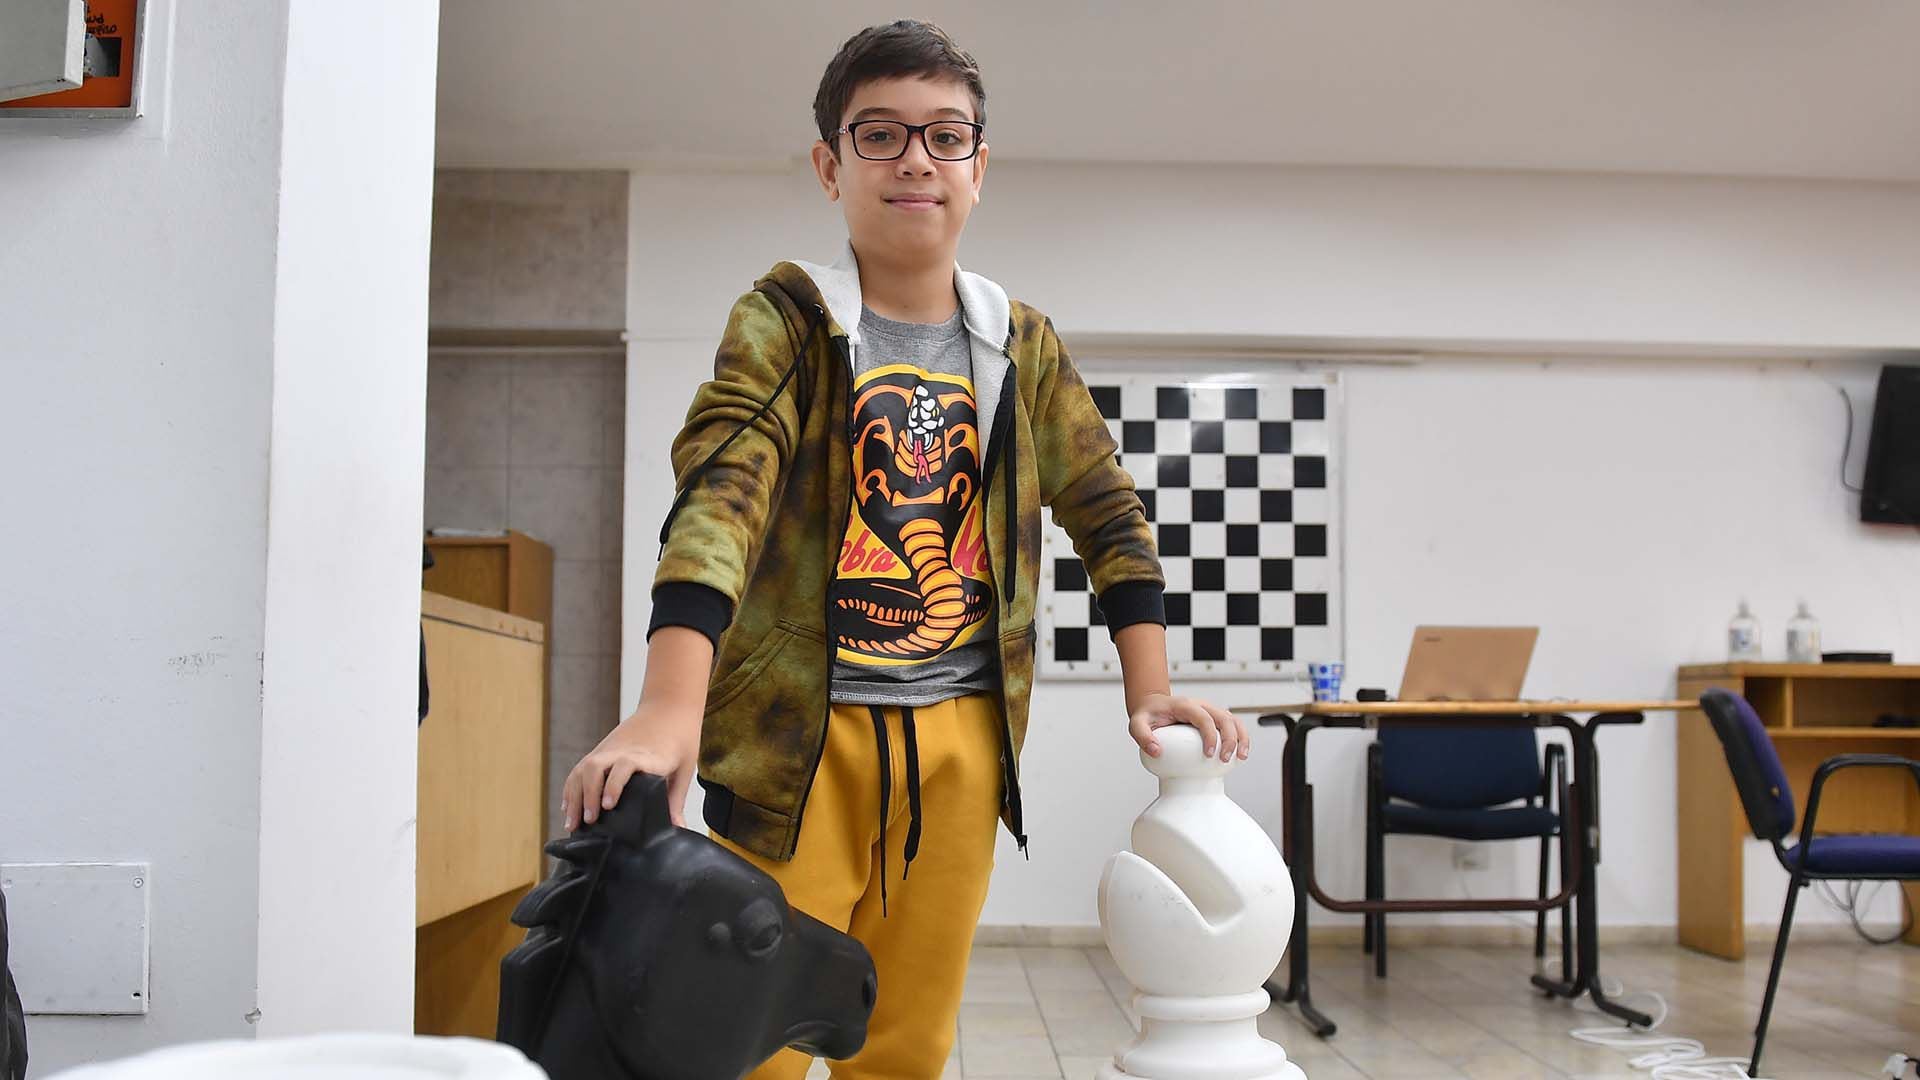 Faustino Oro, el chico de oro del ajedrez mundial